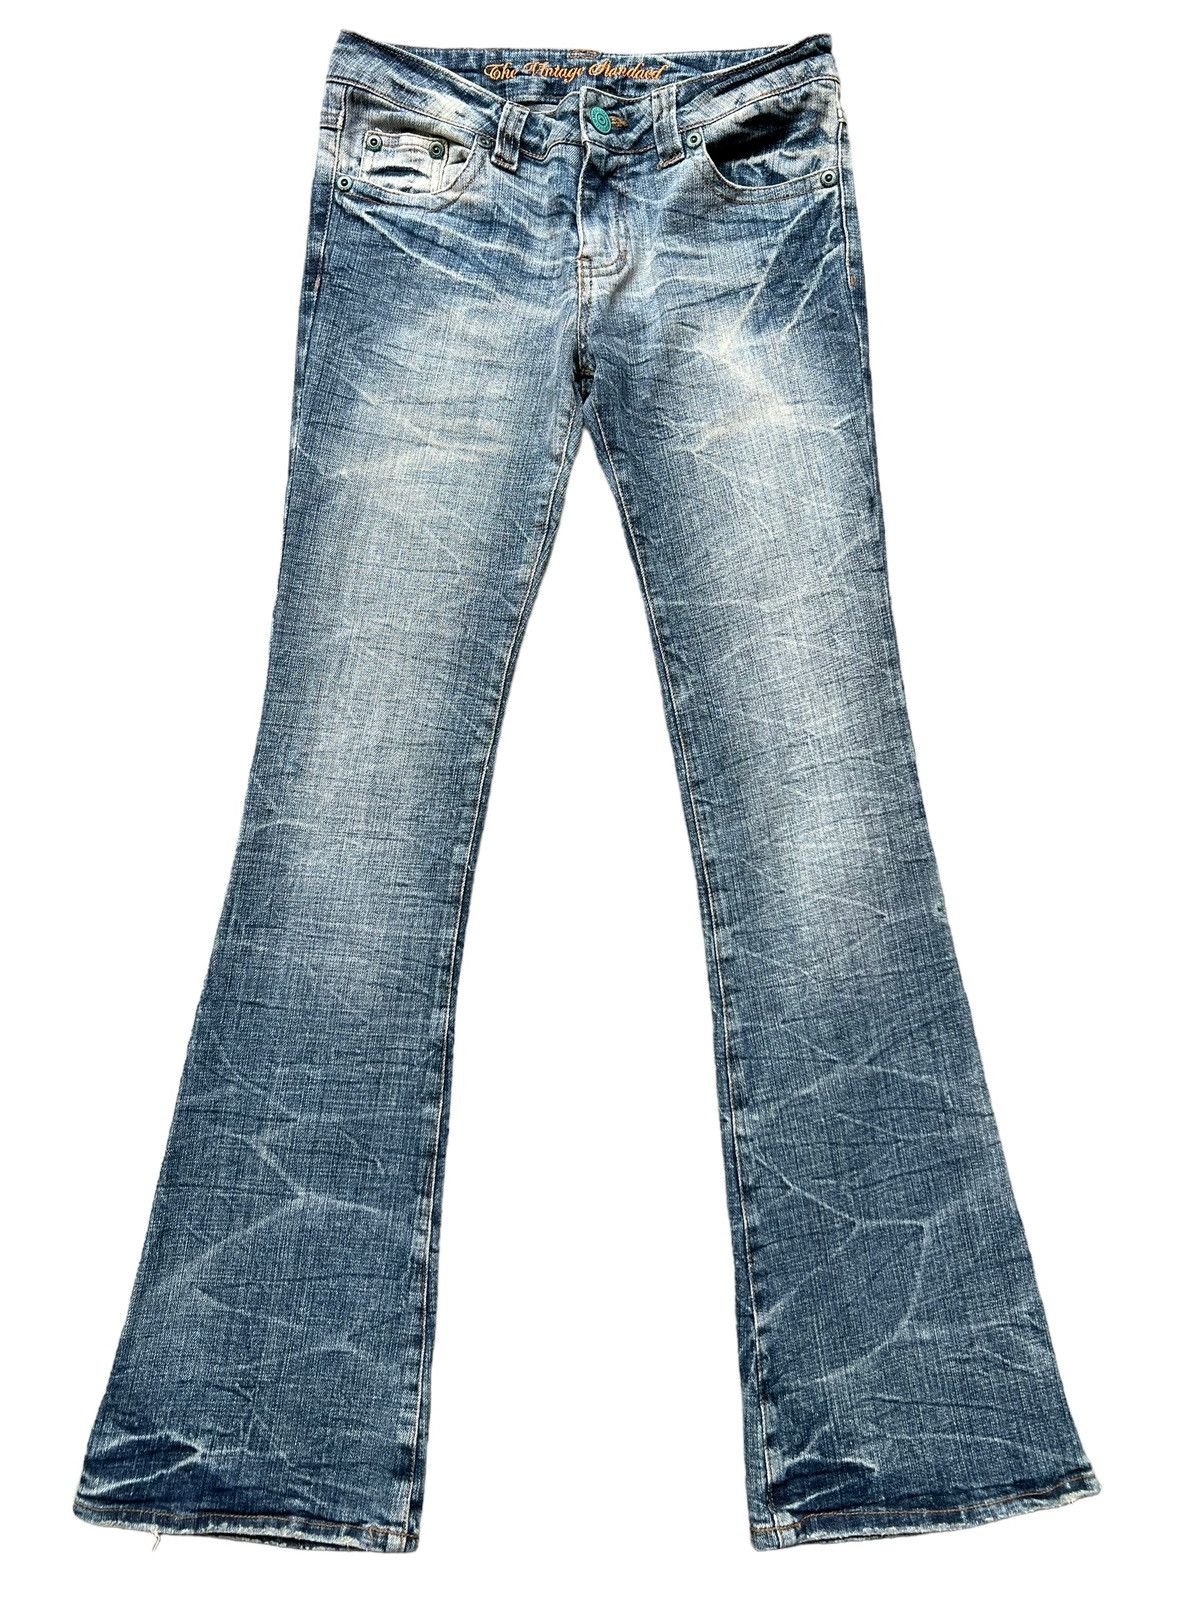 Hype - Vintage Standard Distressed Lowrise Flare Denim Jeans 29x32 - 2